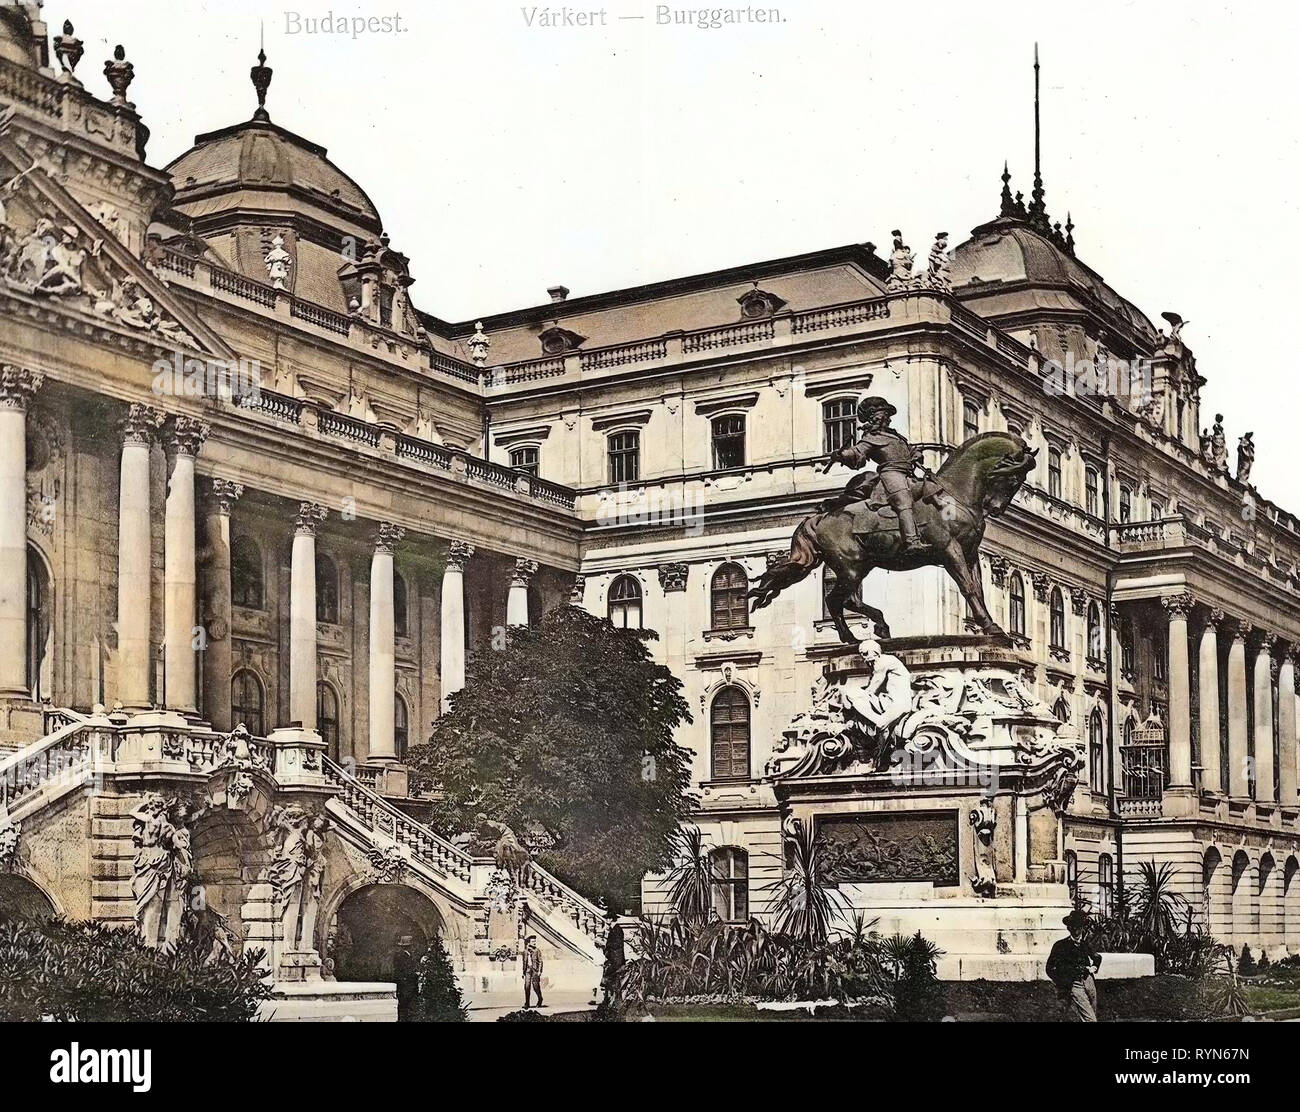 Hungarian National Gallery, Prince Eugene monument, Budapest, 1904, Burggarten, Hungary Stock Photo